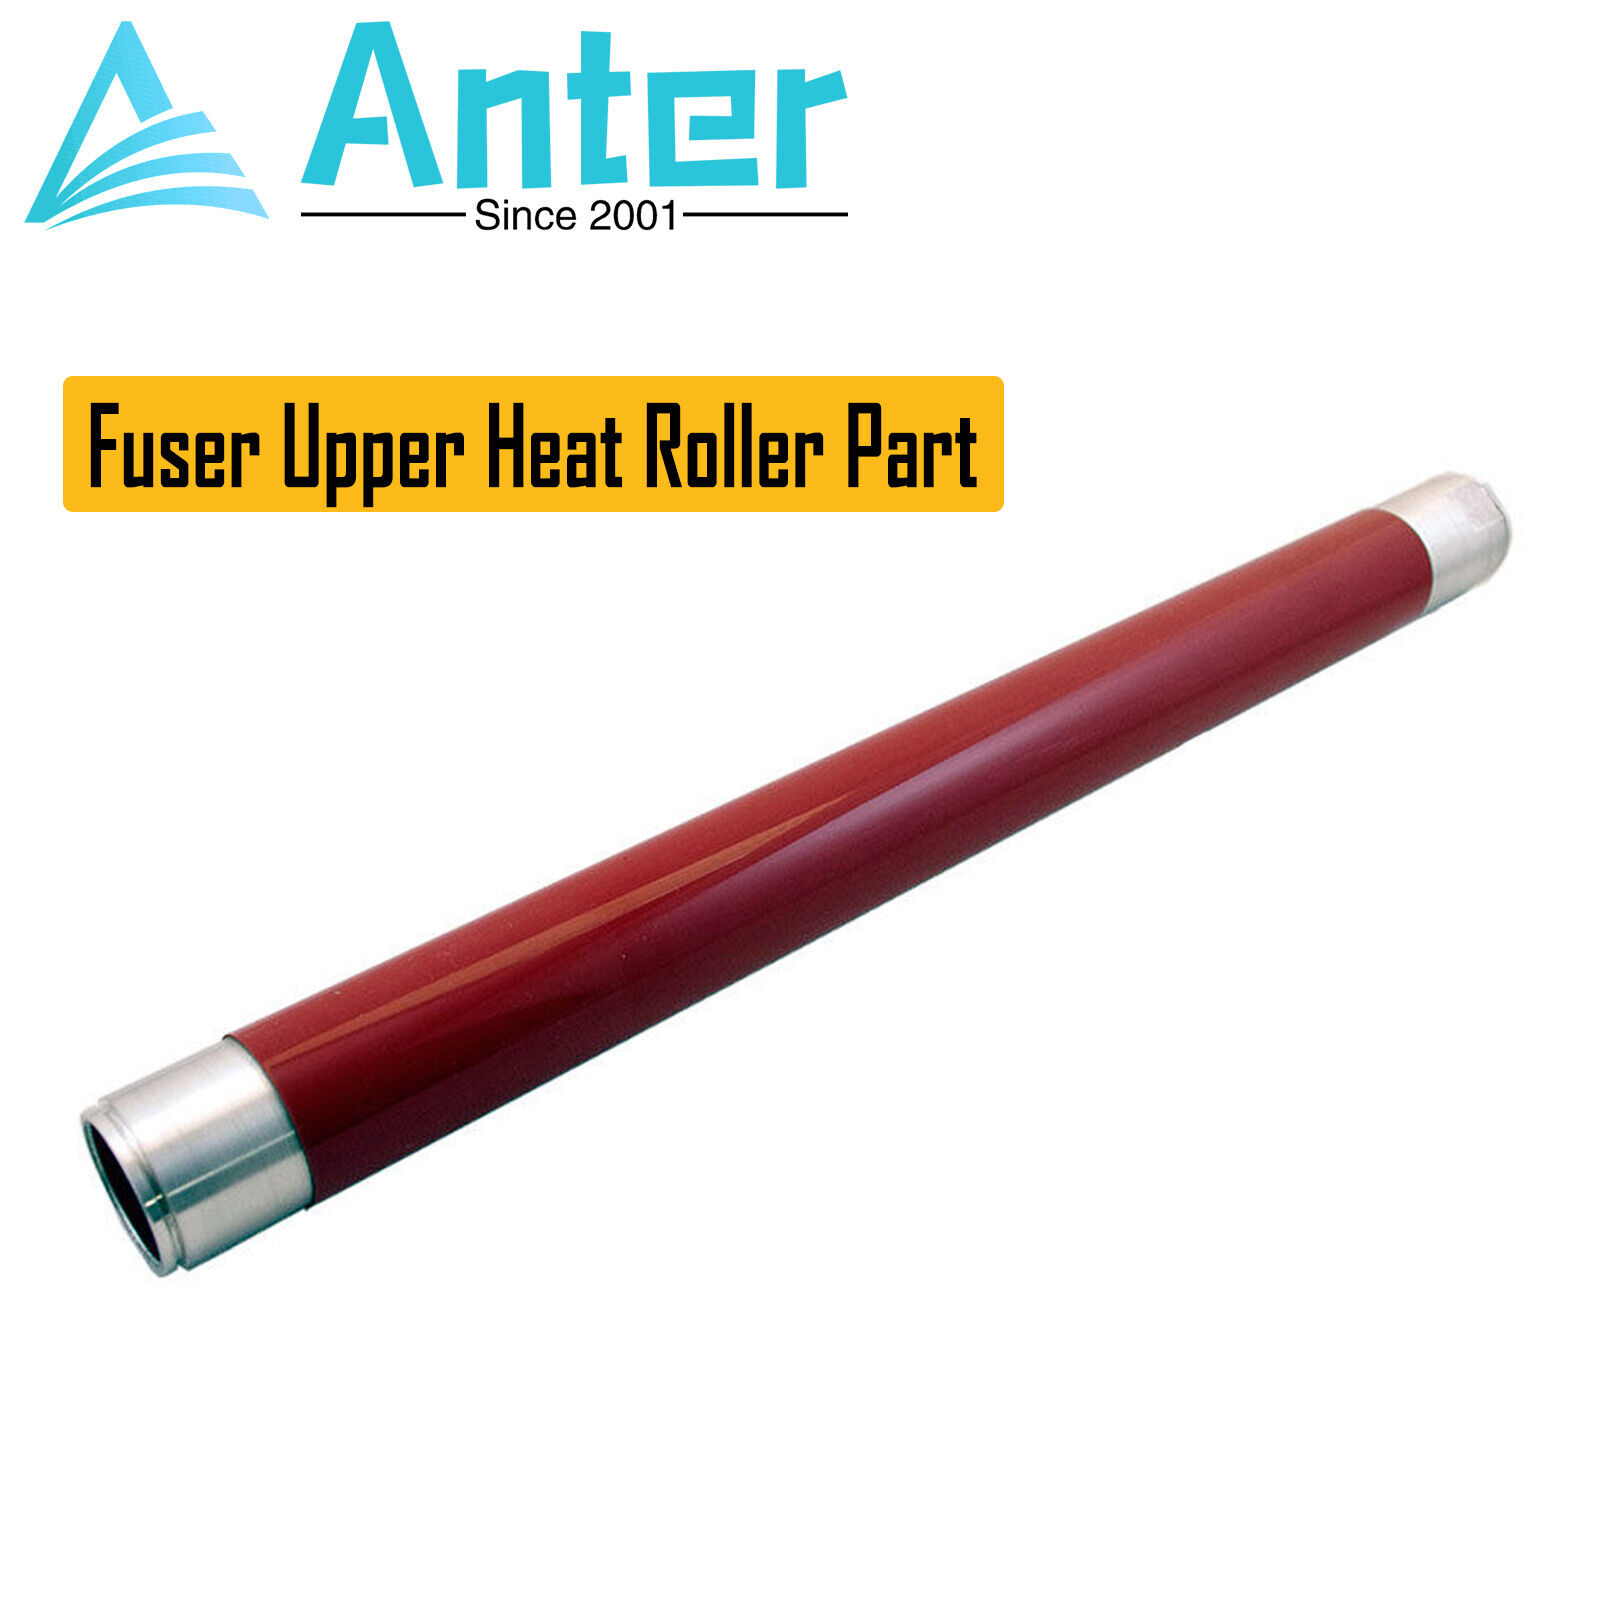 Fuser Upper Heat Roller Part for Xerox DocuColor 240 242 250 252 260 550/560/570